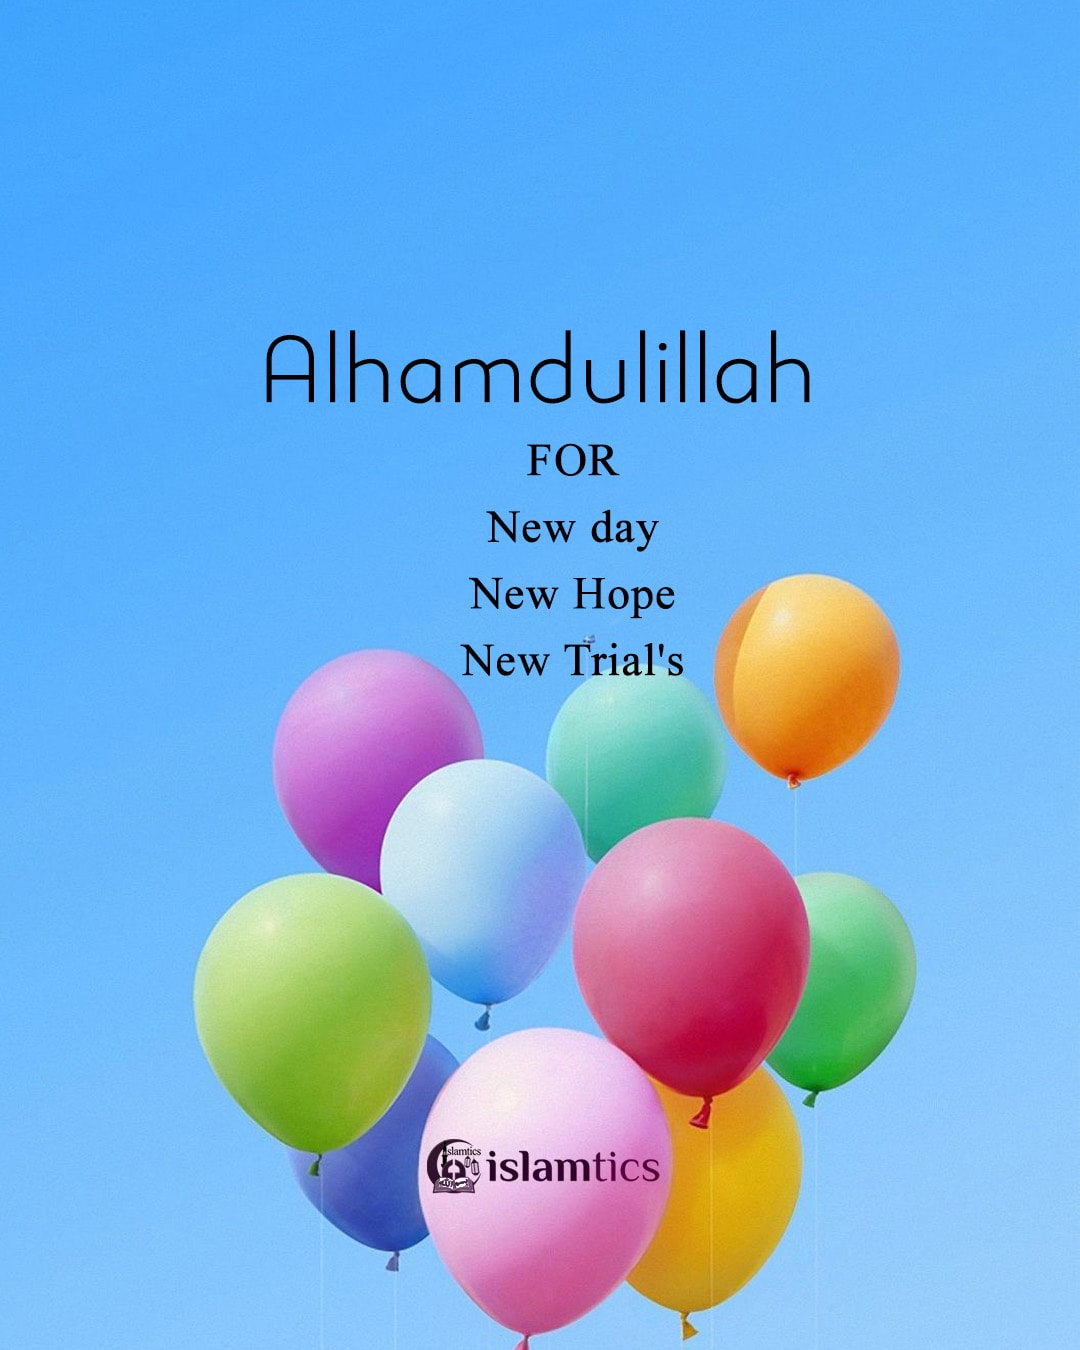 Alhamdulillah FOR New day | islamtics